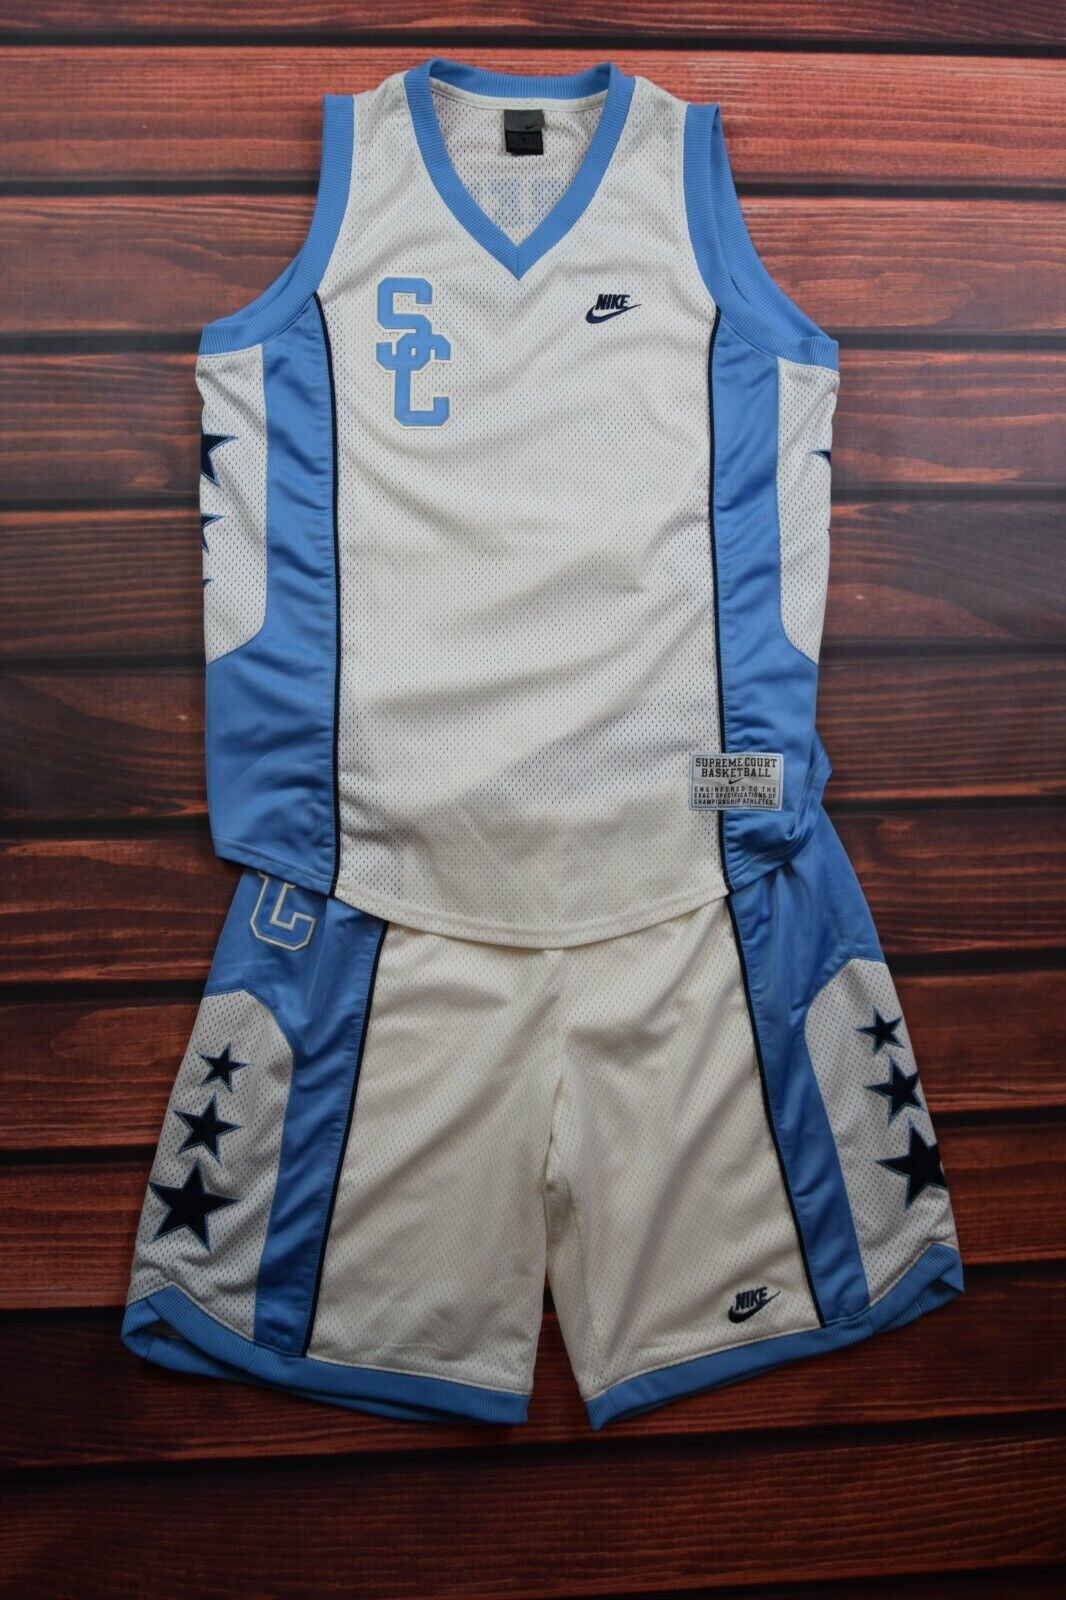 nike supreme court set shirt/jersey + shorts blue white M medium basketball  sc